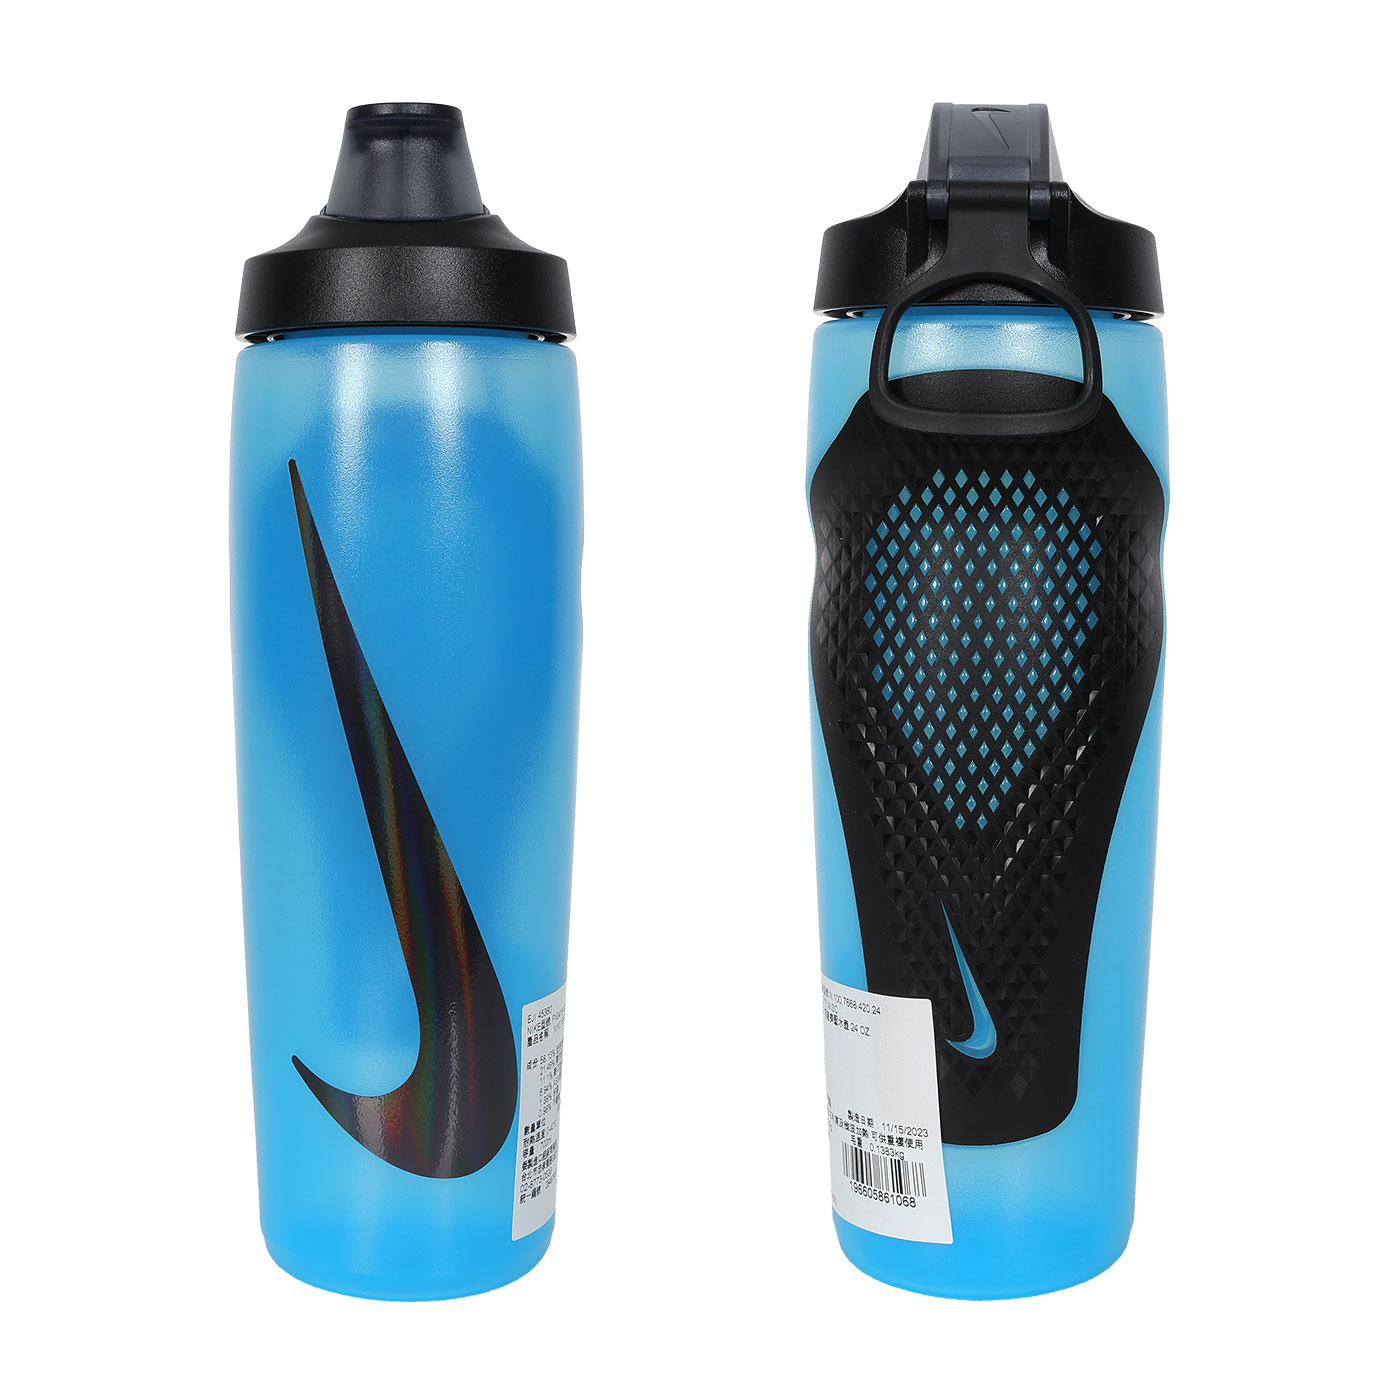 NIKE REFUEL BOTTLE 瓶蓋擠壓水壺 24 OZ  N100766842024 - 霧藍黑